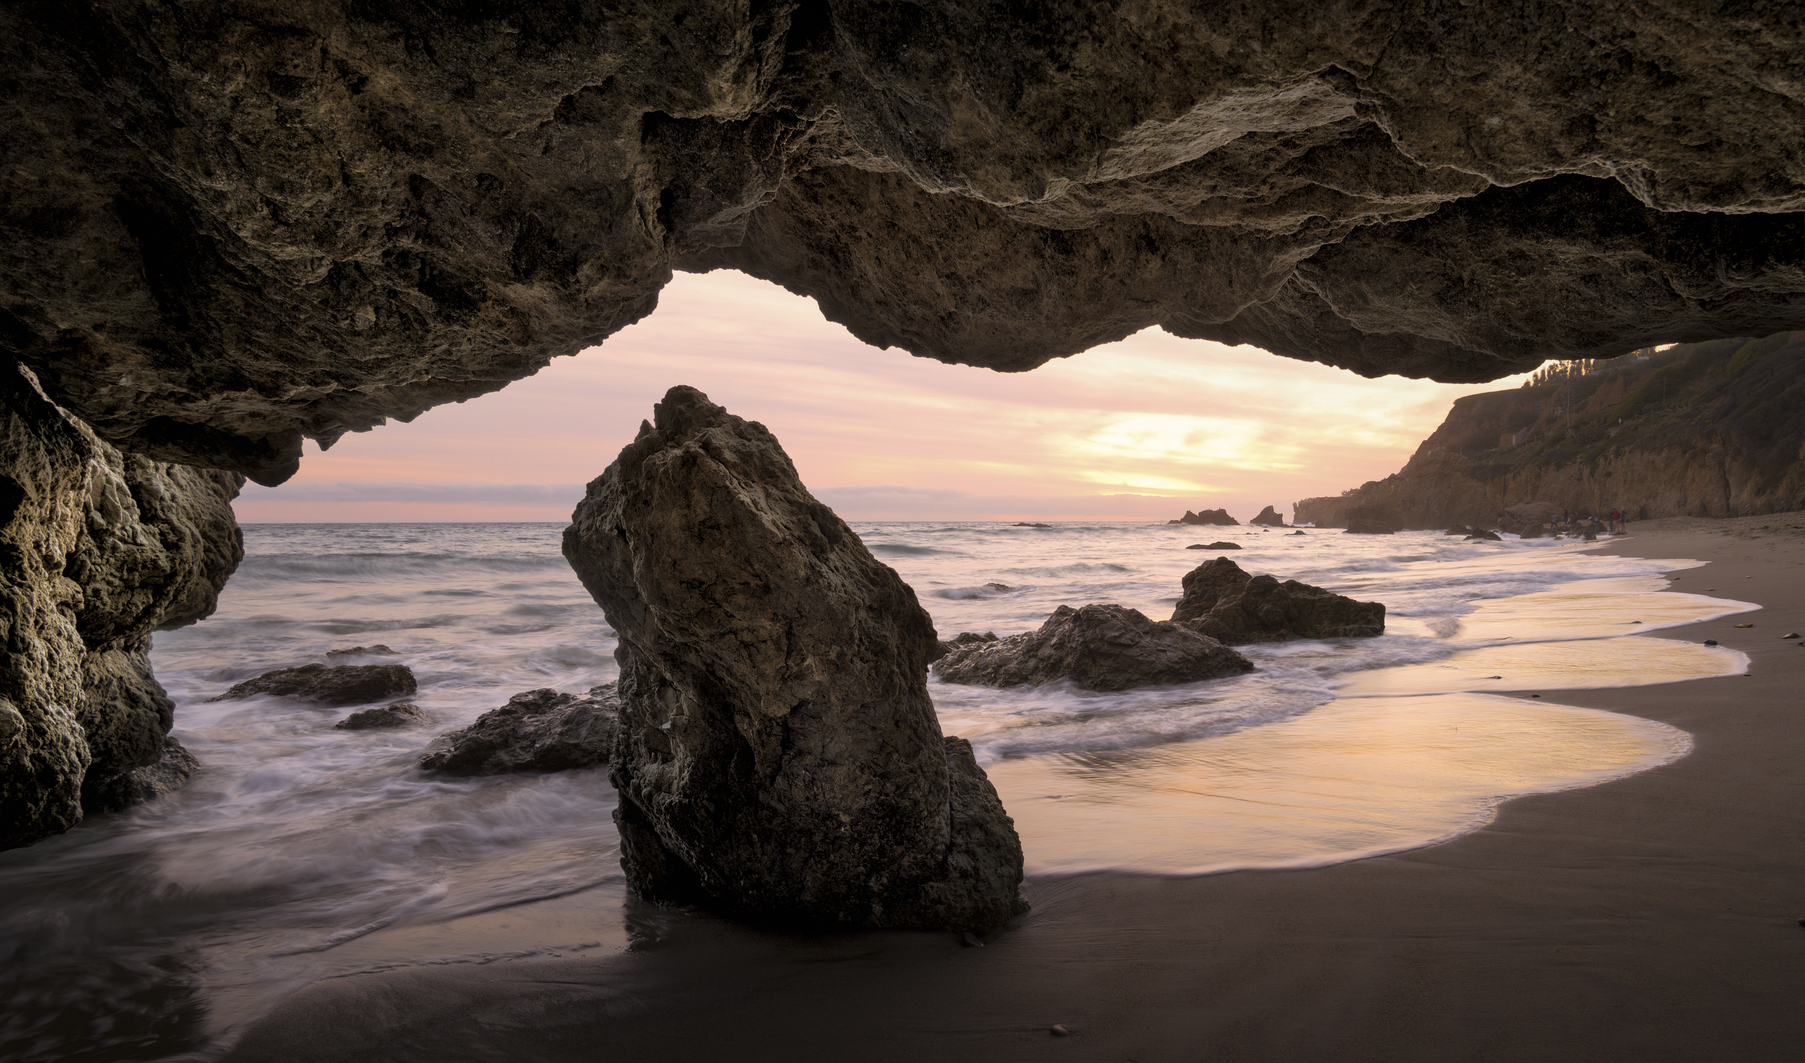 Seashore Cave at sunset, shot at the El Matador Beach, CA